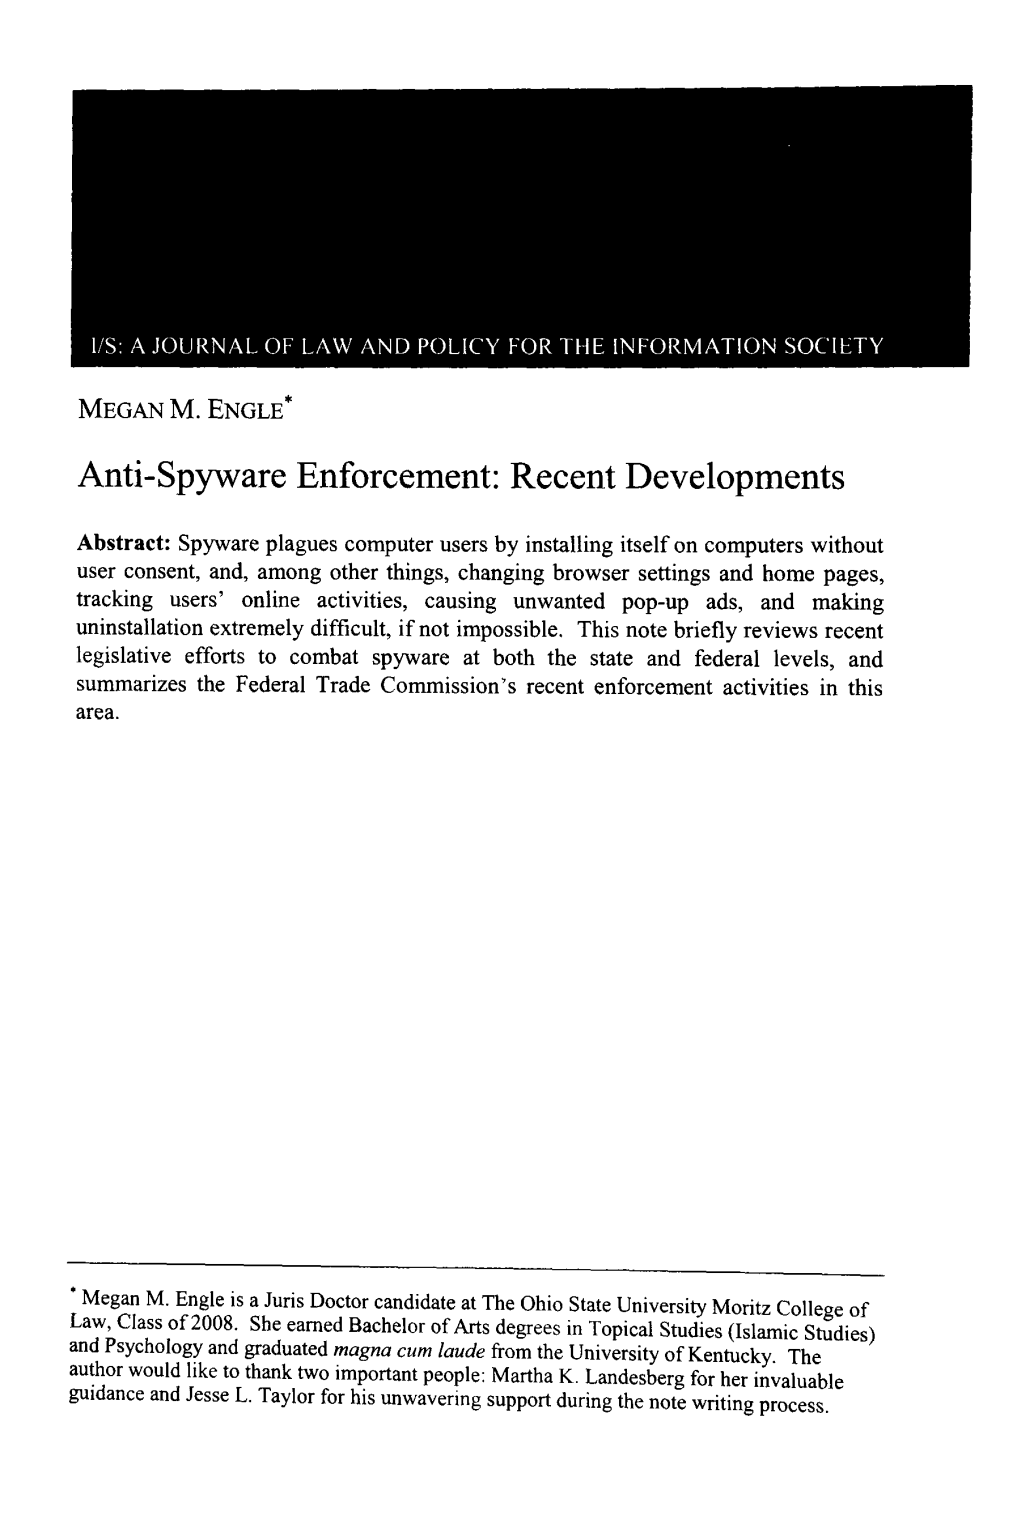 Anti-Spyware Enforcement: Recent Developments